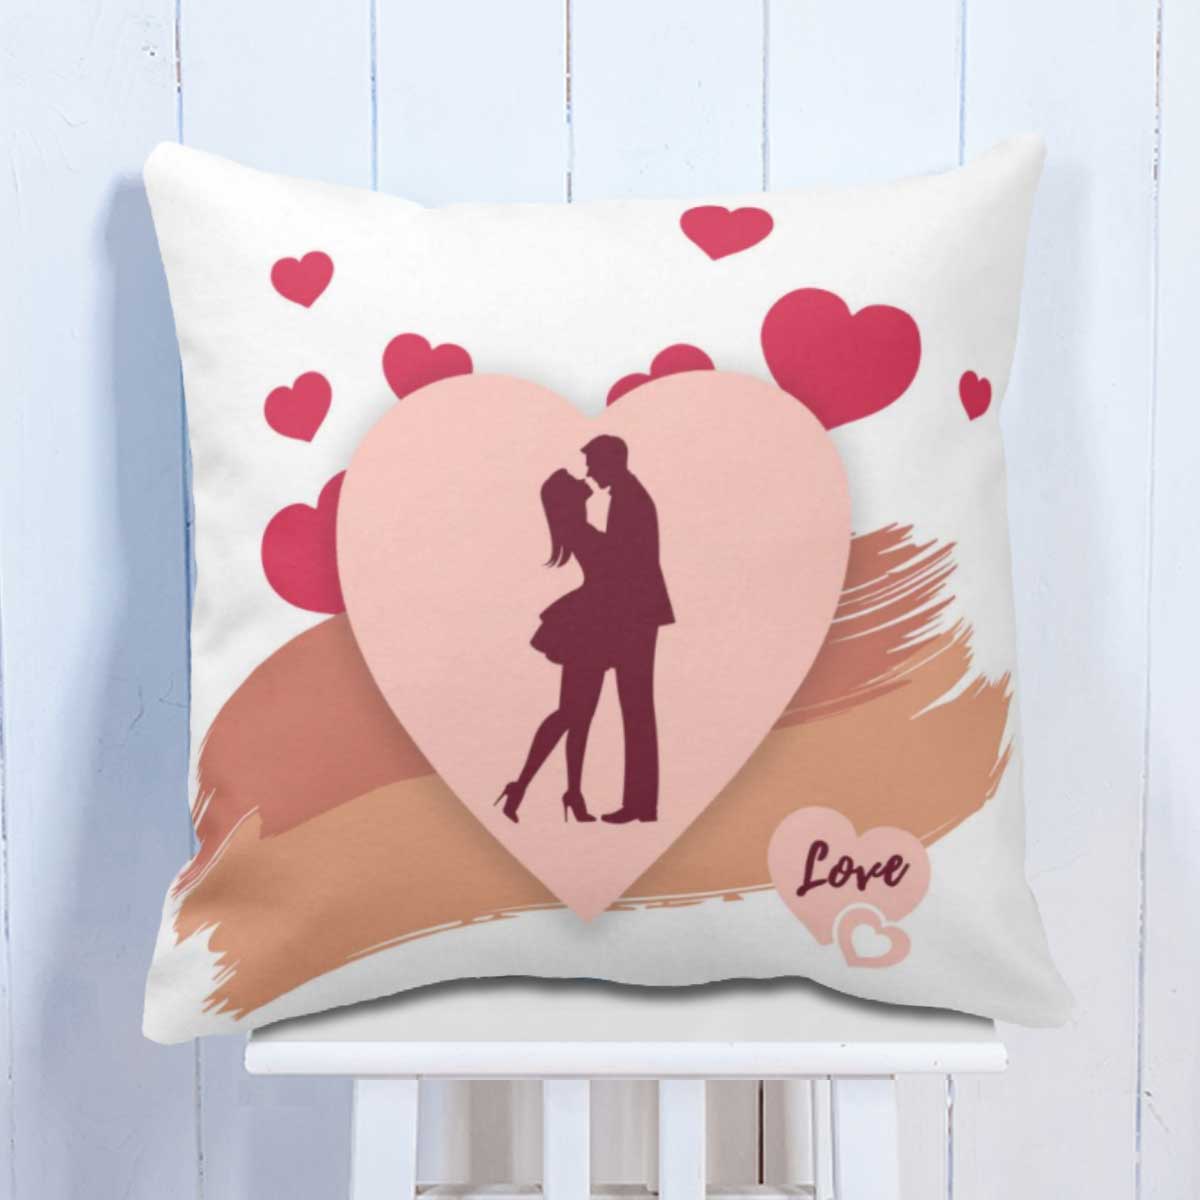 Couple in Love 3 Piece Gift Hamper